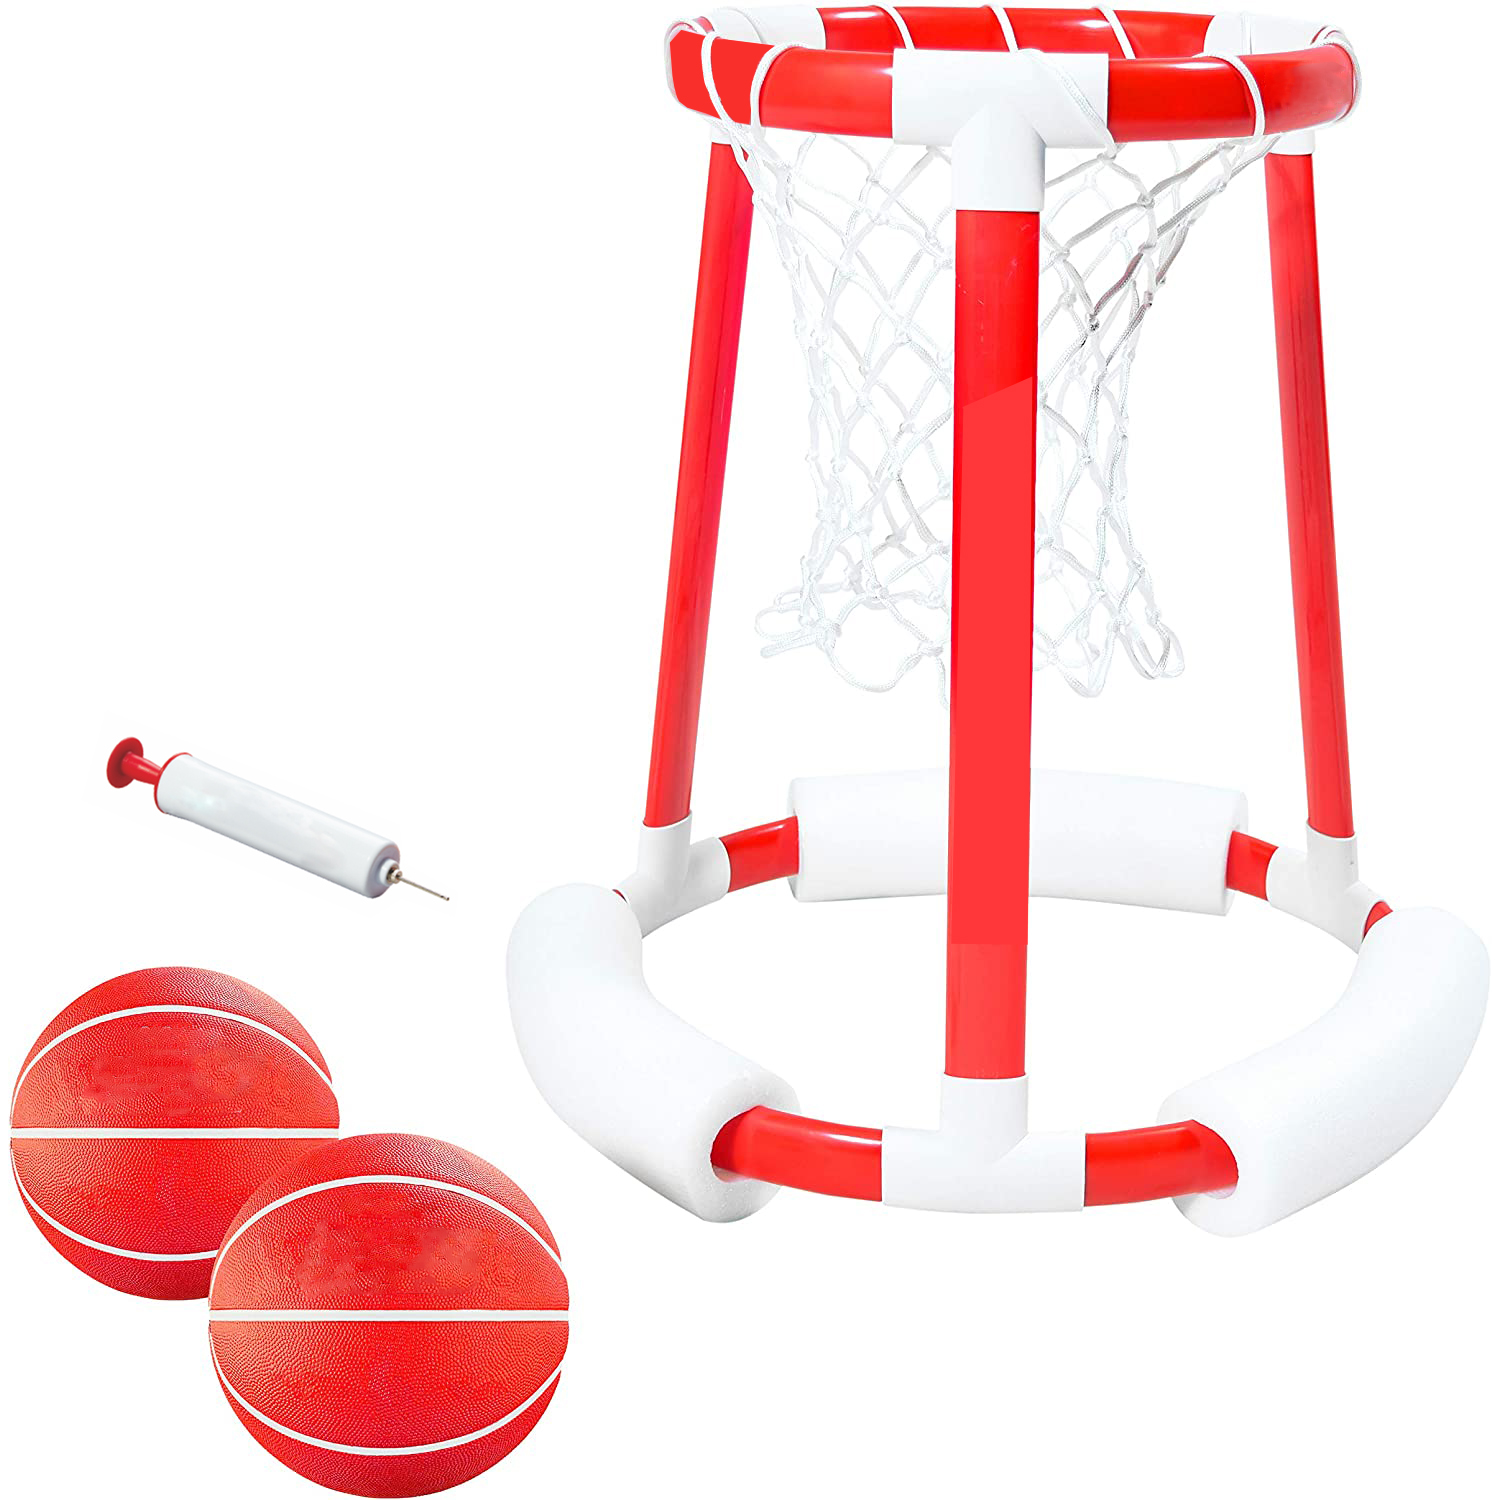 Water Splash Basketball Hoop Game Set